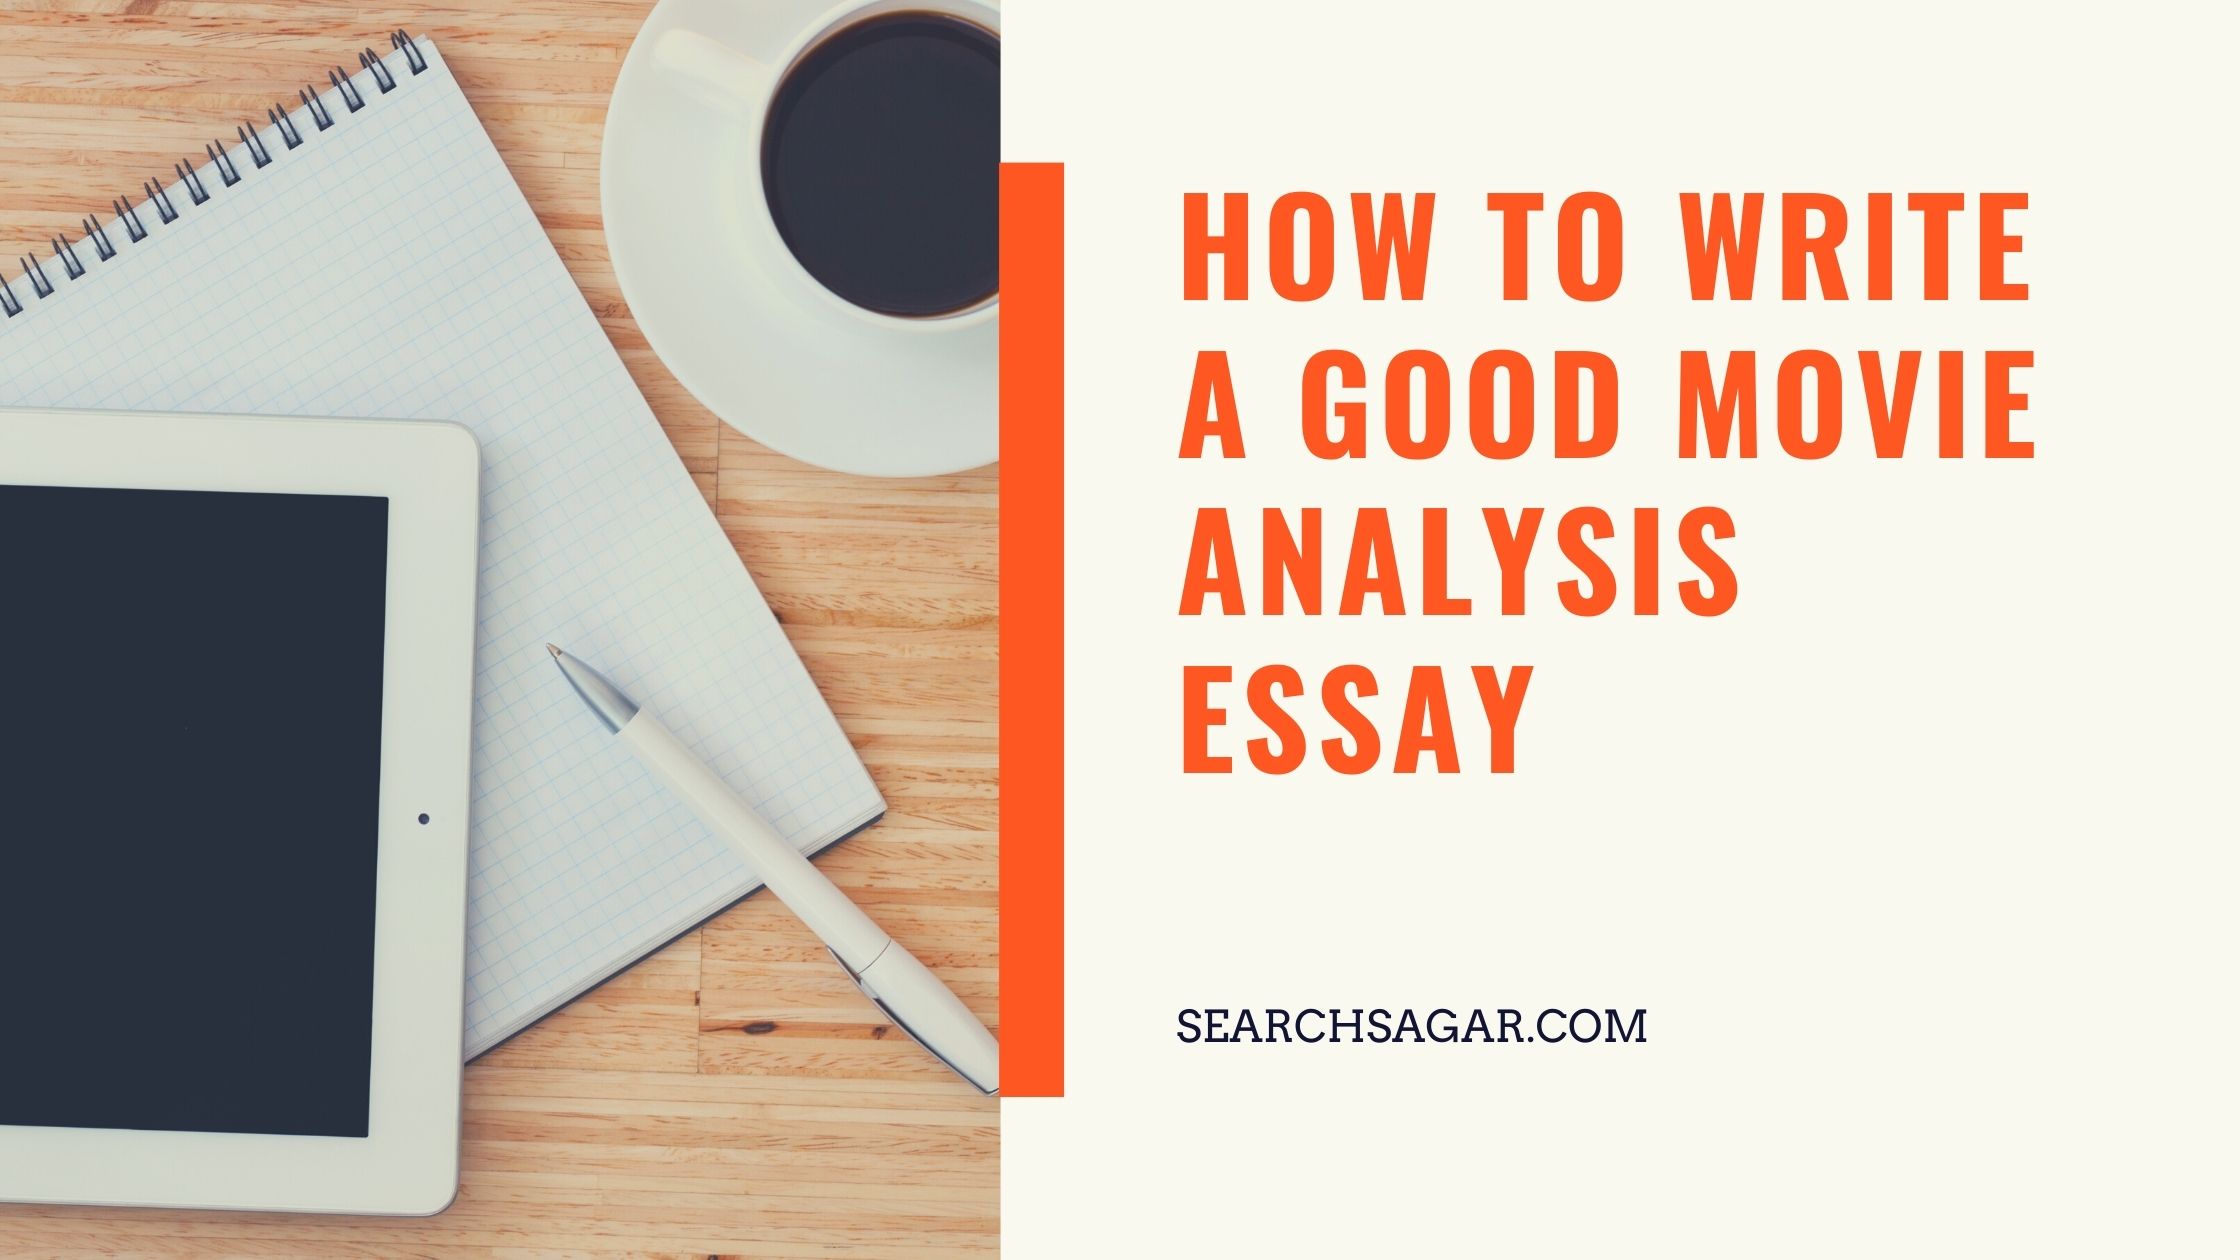 How to Write a Good Movie Analysis Essay